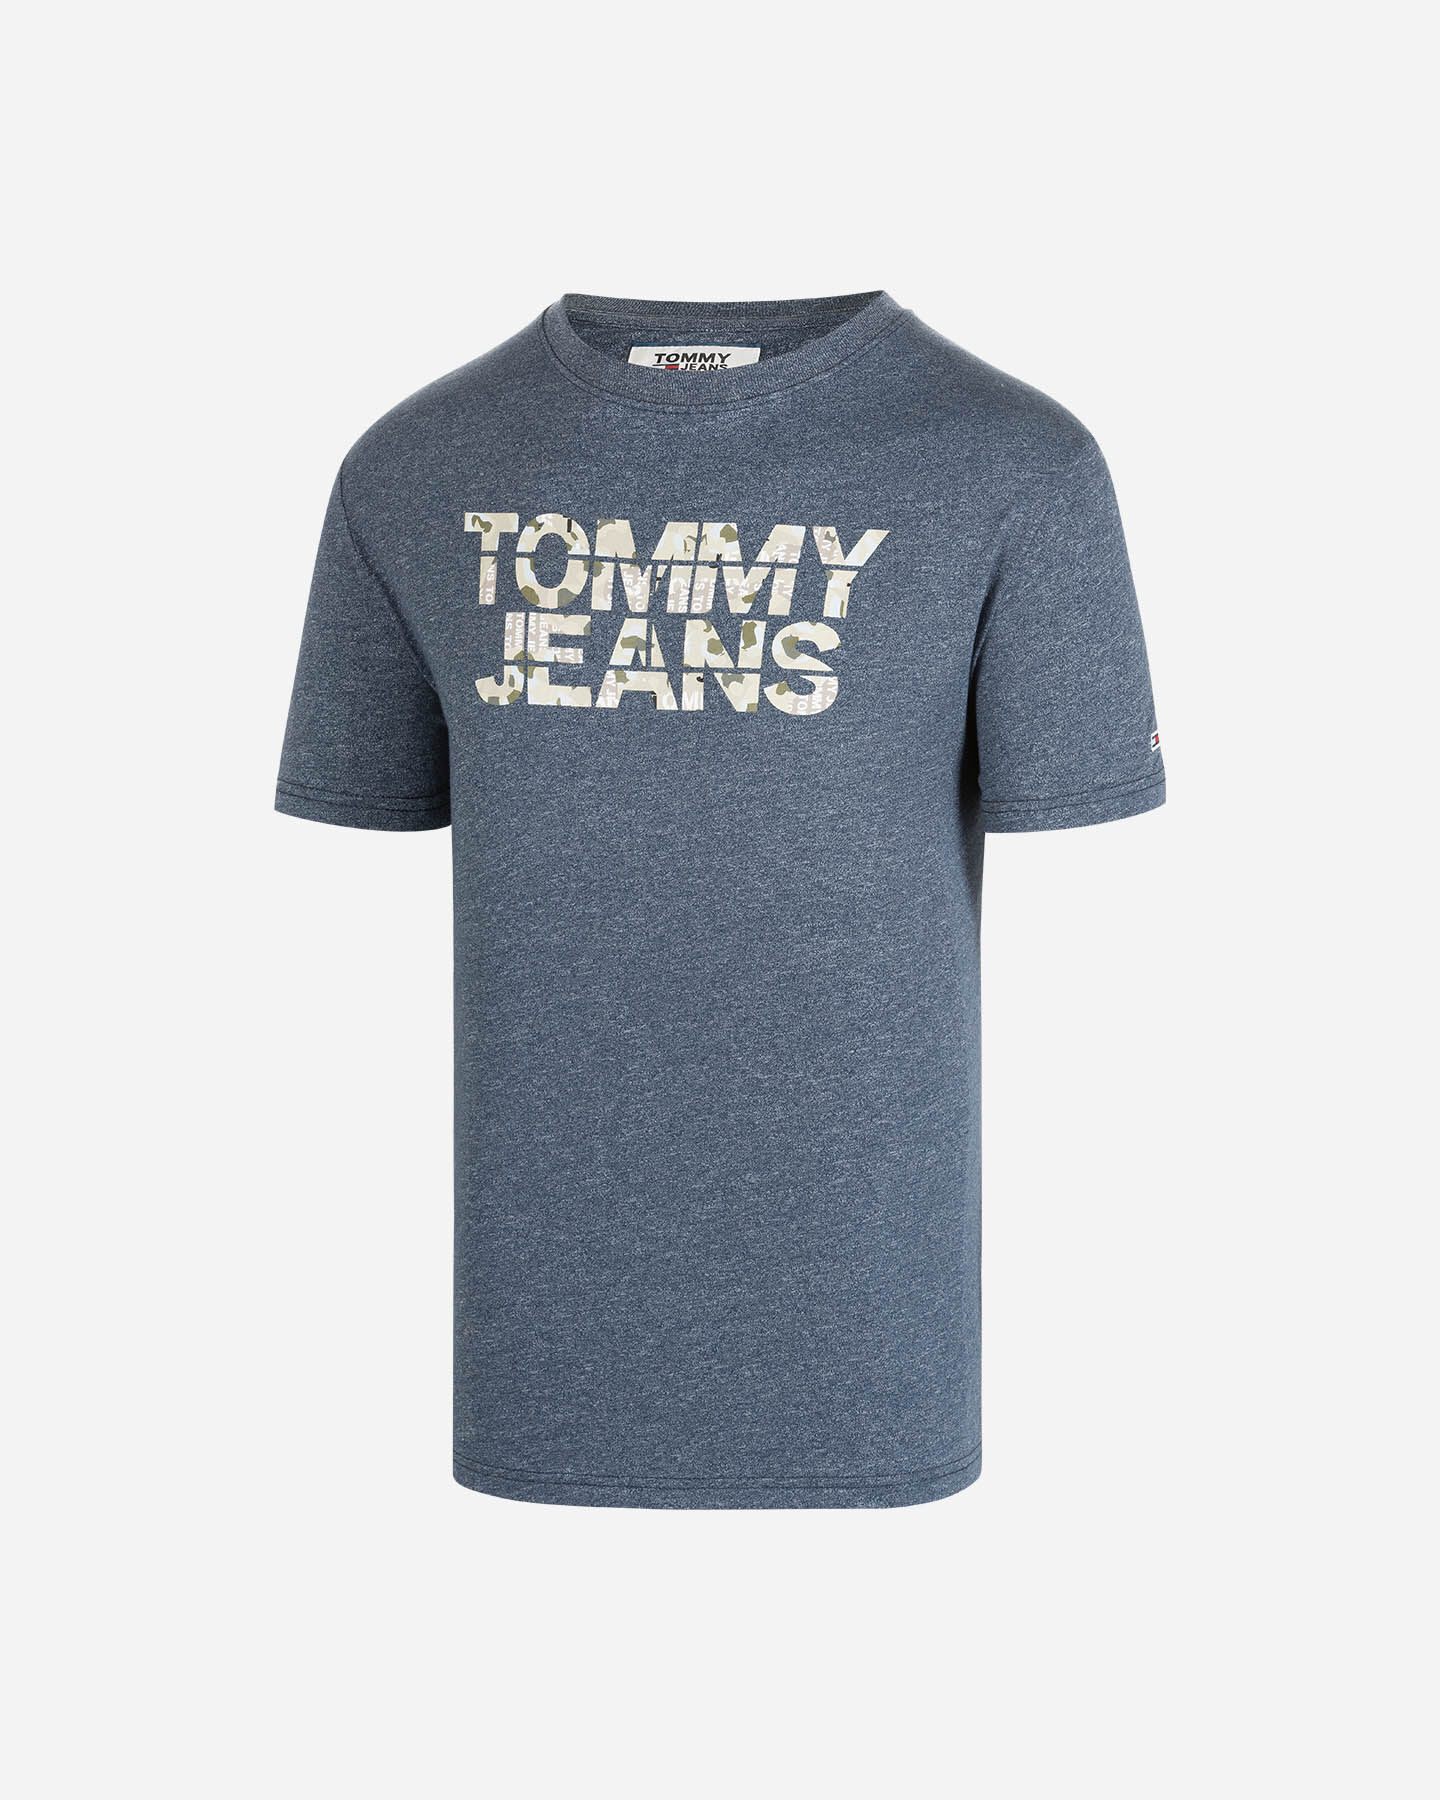  T-Shirt TOMMY HILFIGER LOGO M S4090796|C87|XS scatto 0